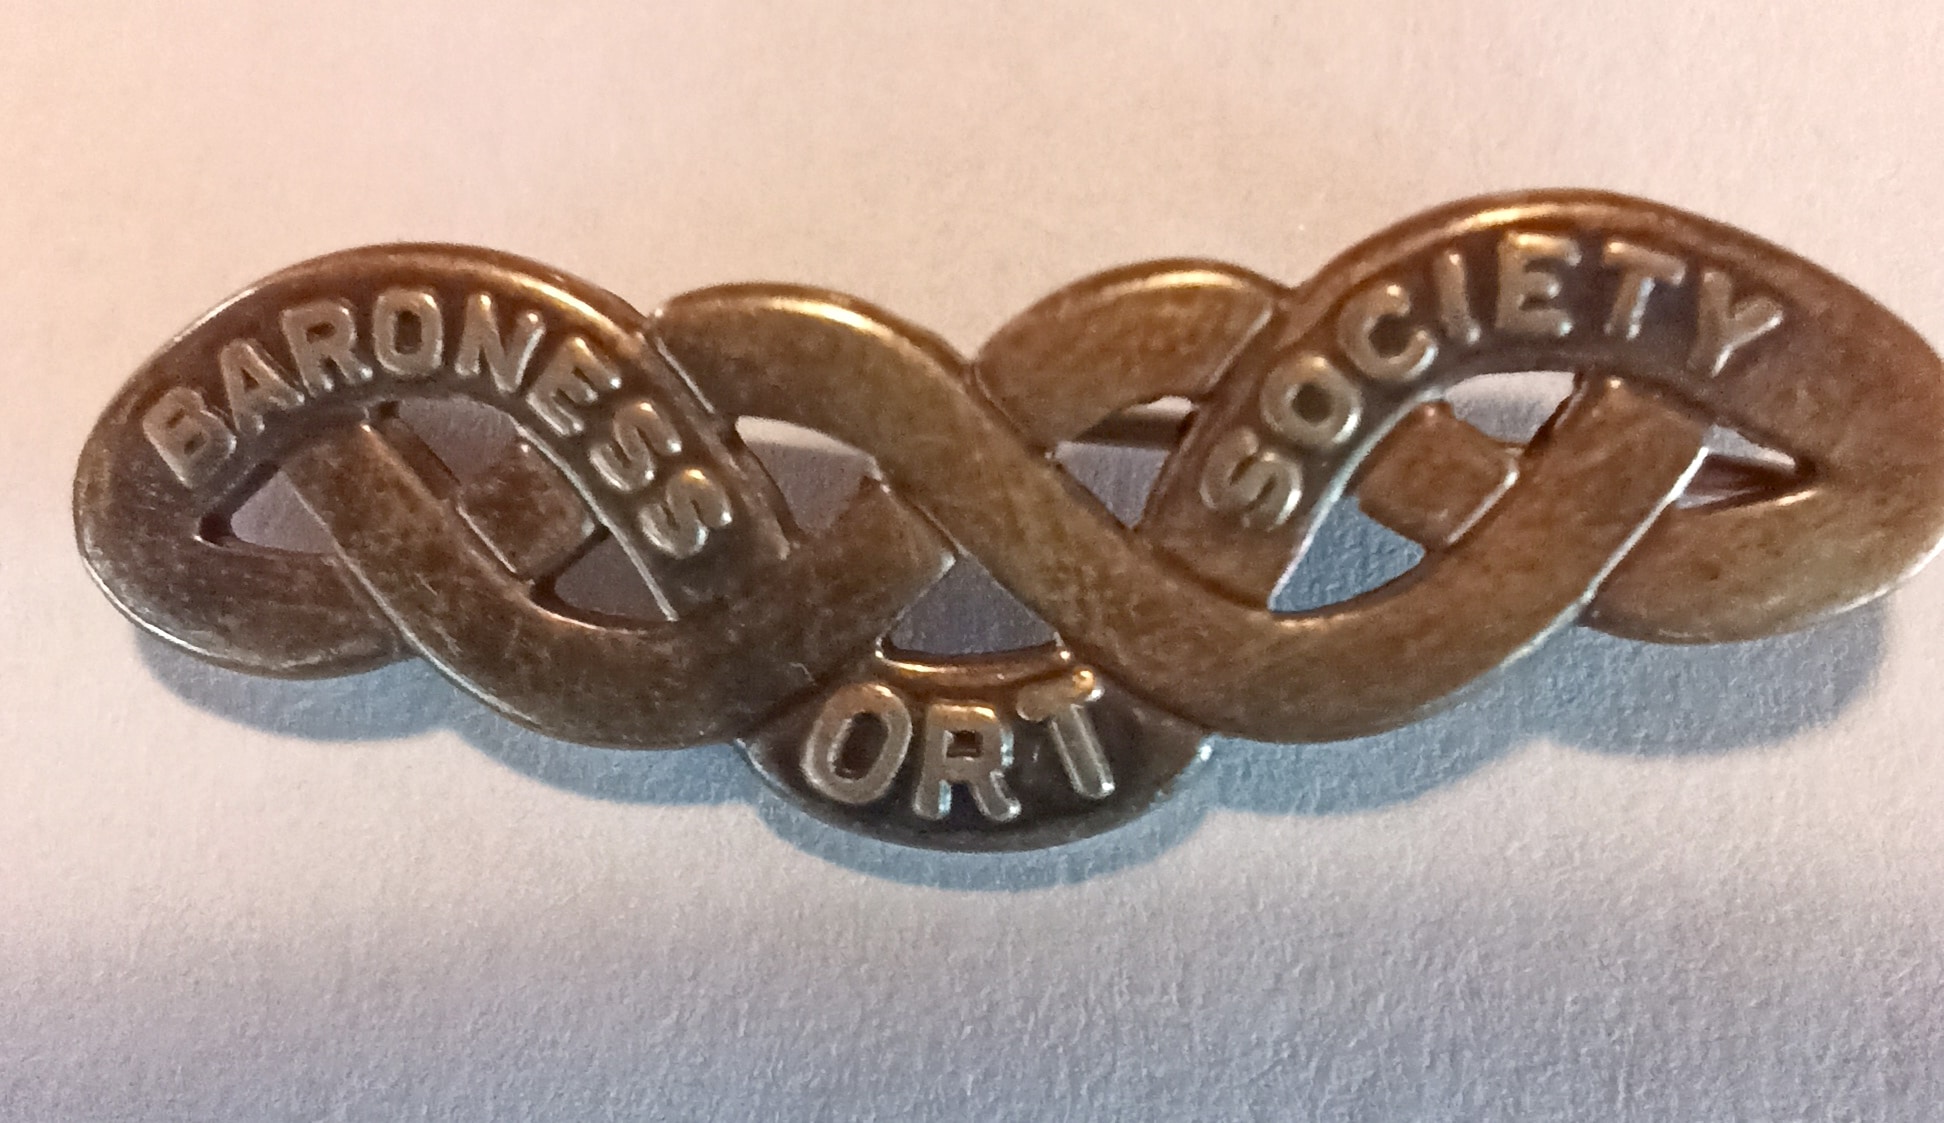 Baroness ORT Society Pin